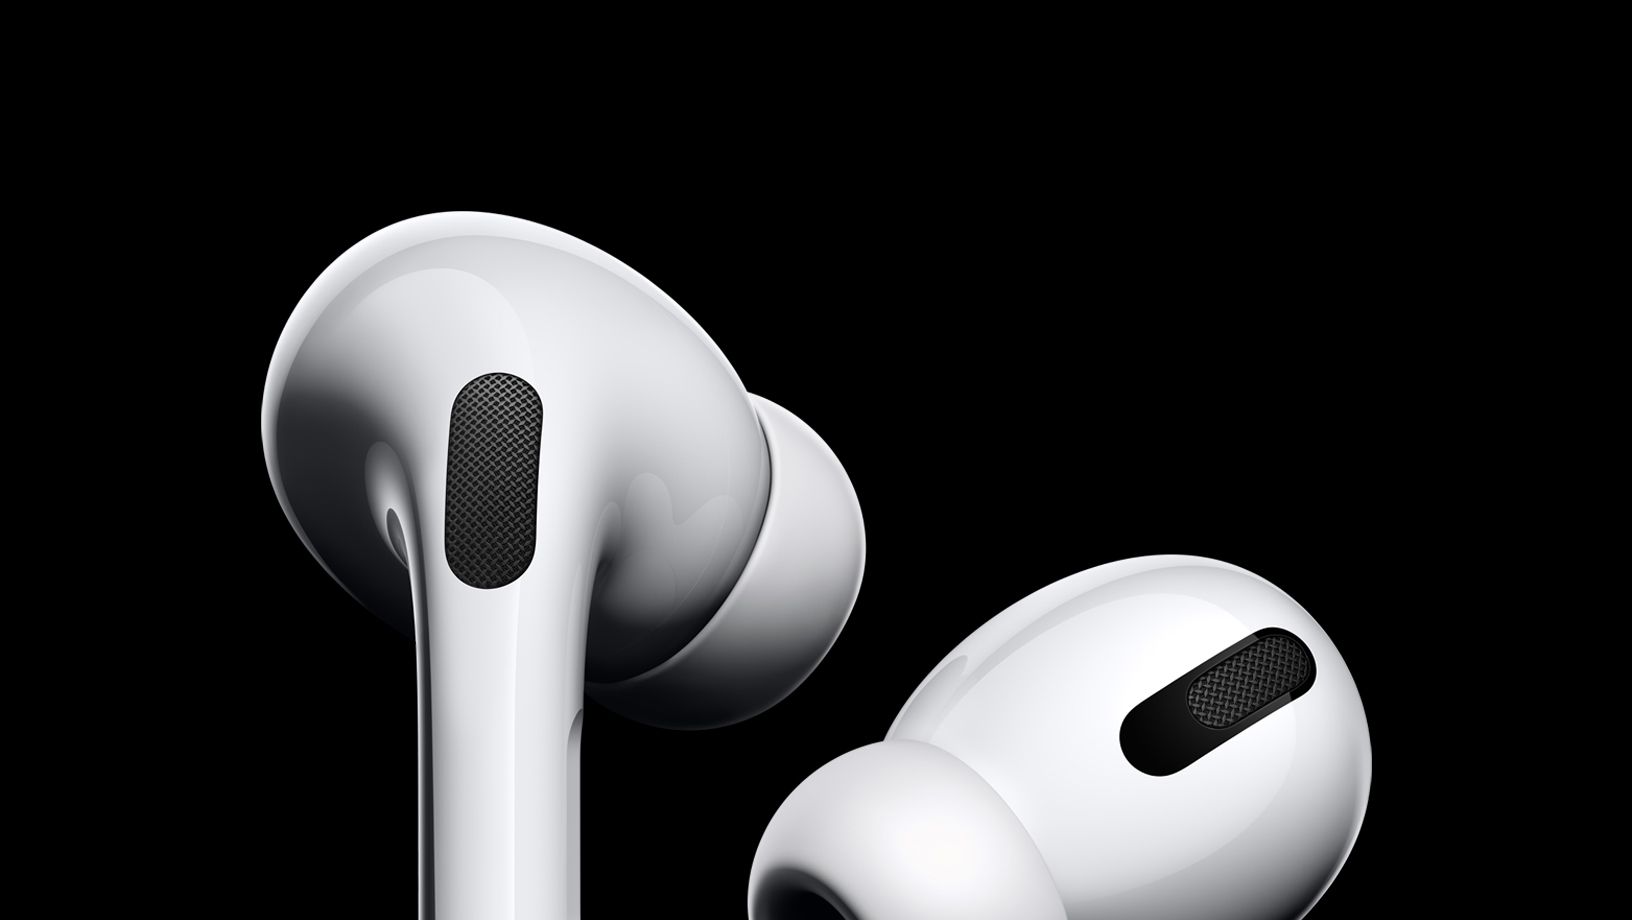 Sennheiser's latest Momentum 4 headphones and 3 earbuds on sale from $190  (Reg. $250+)